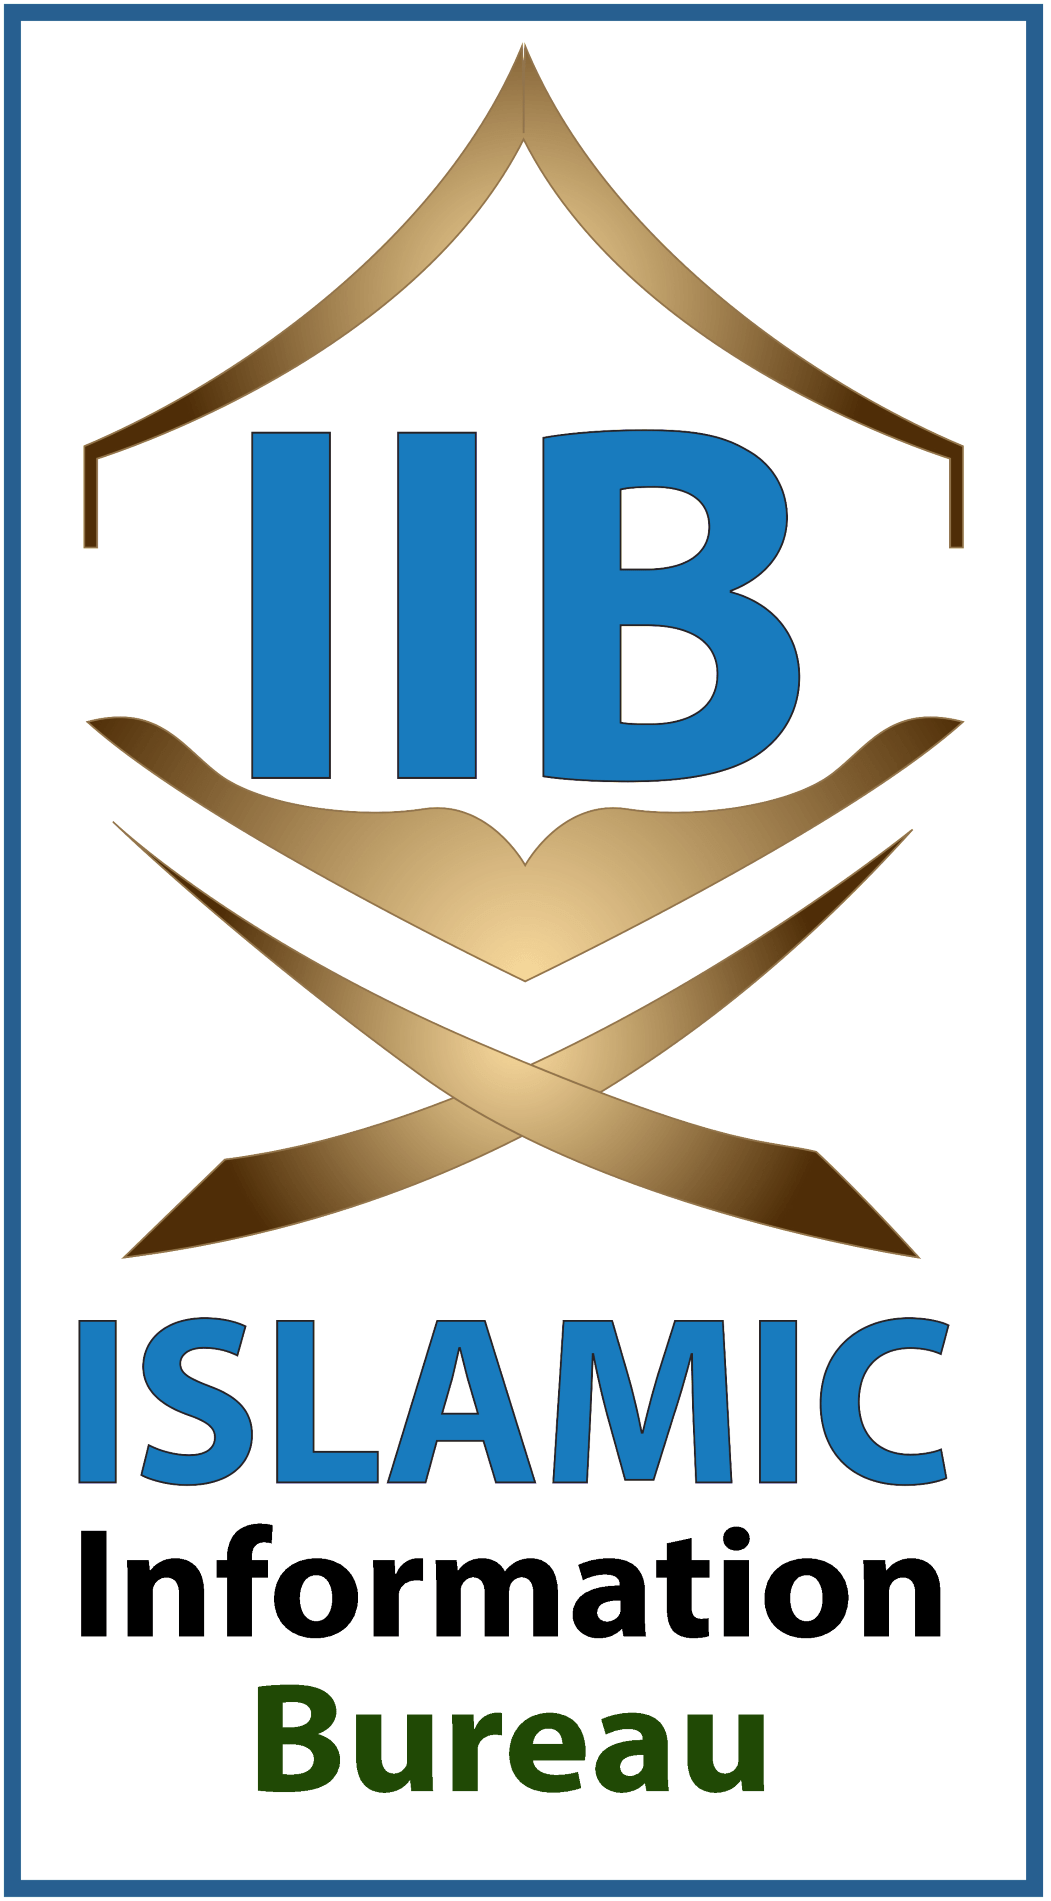 Islamic Information Bureau